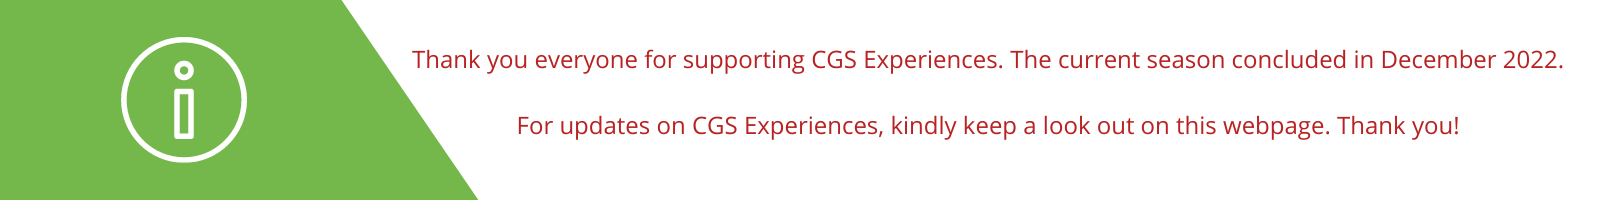 CGS Experience Dec 2022